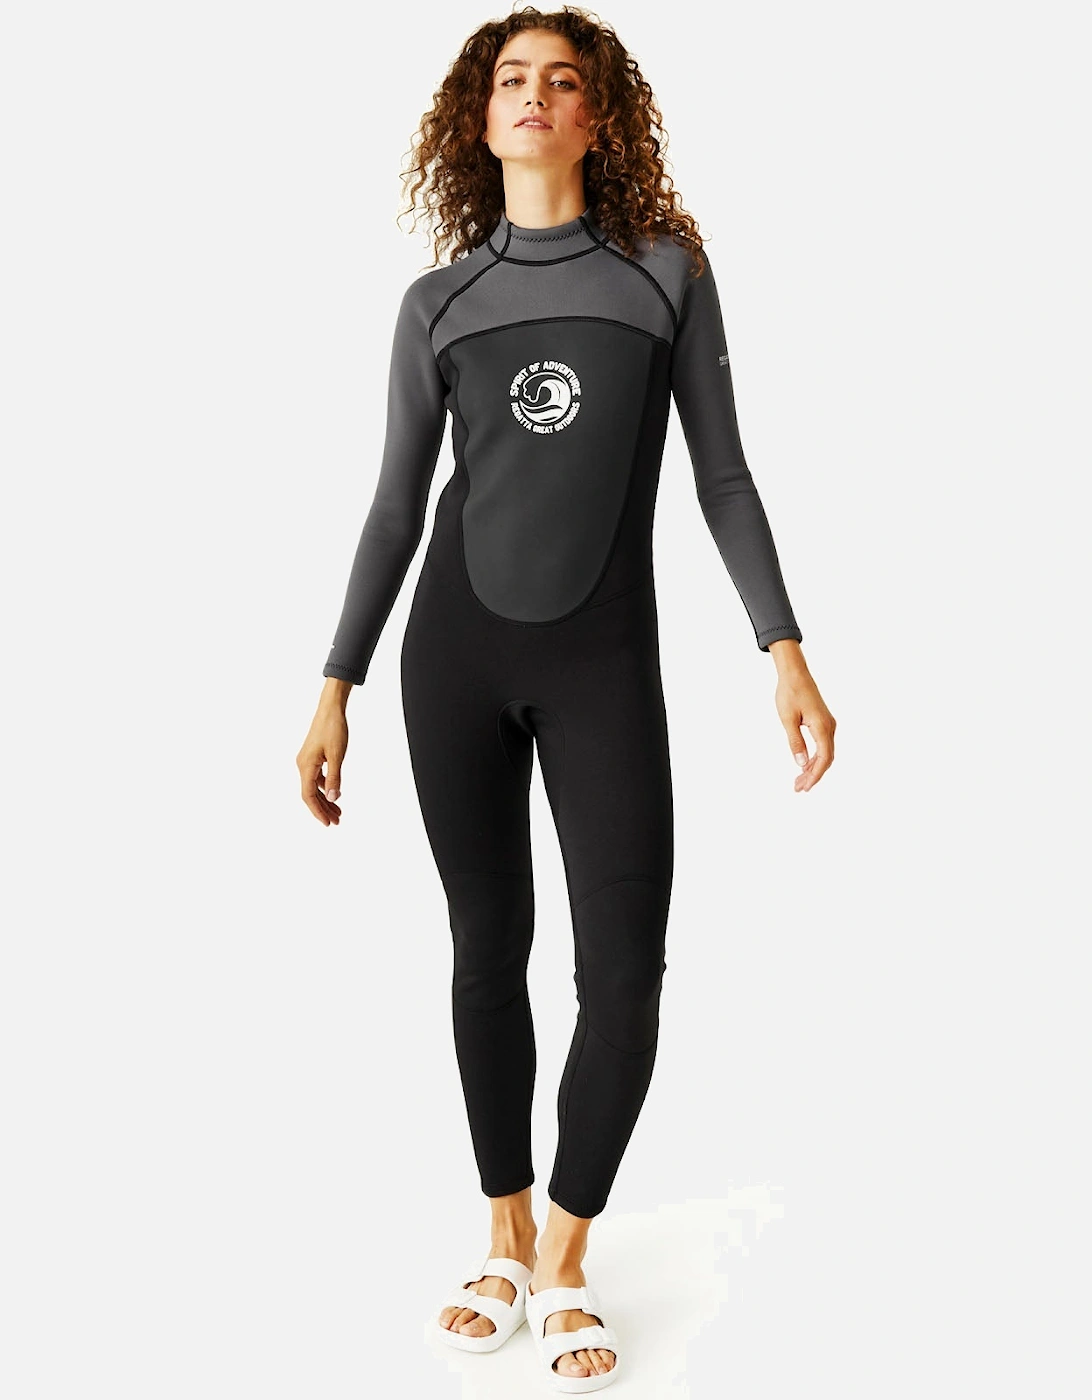 Womens Full Surfing Back Zip Wetsuit